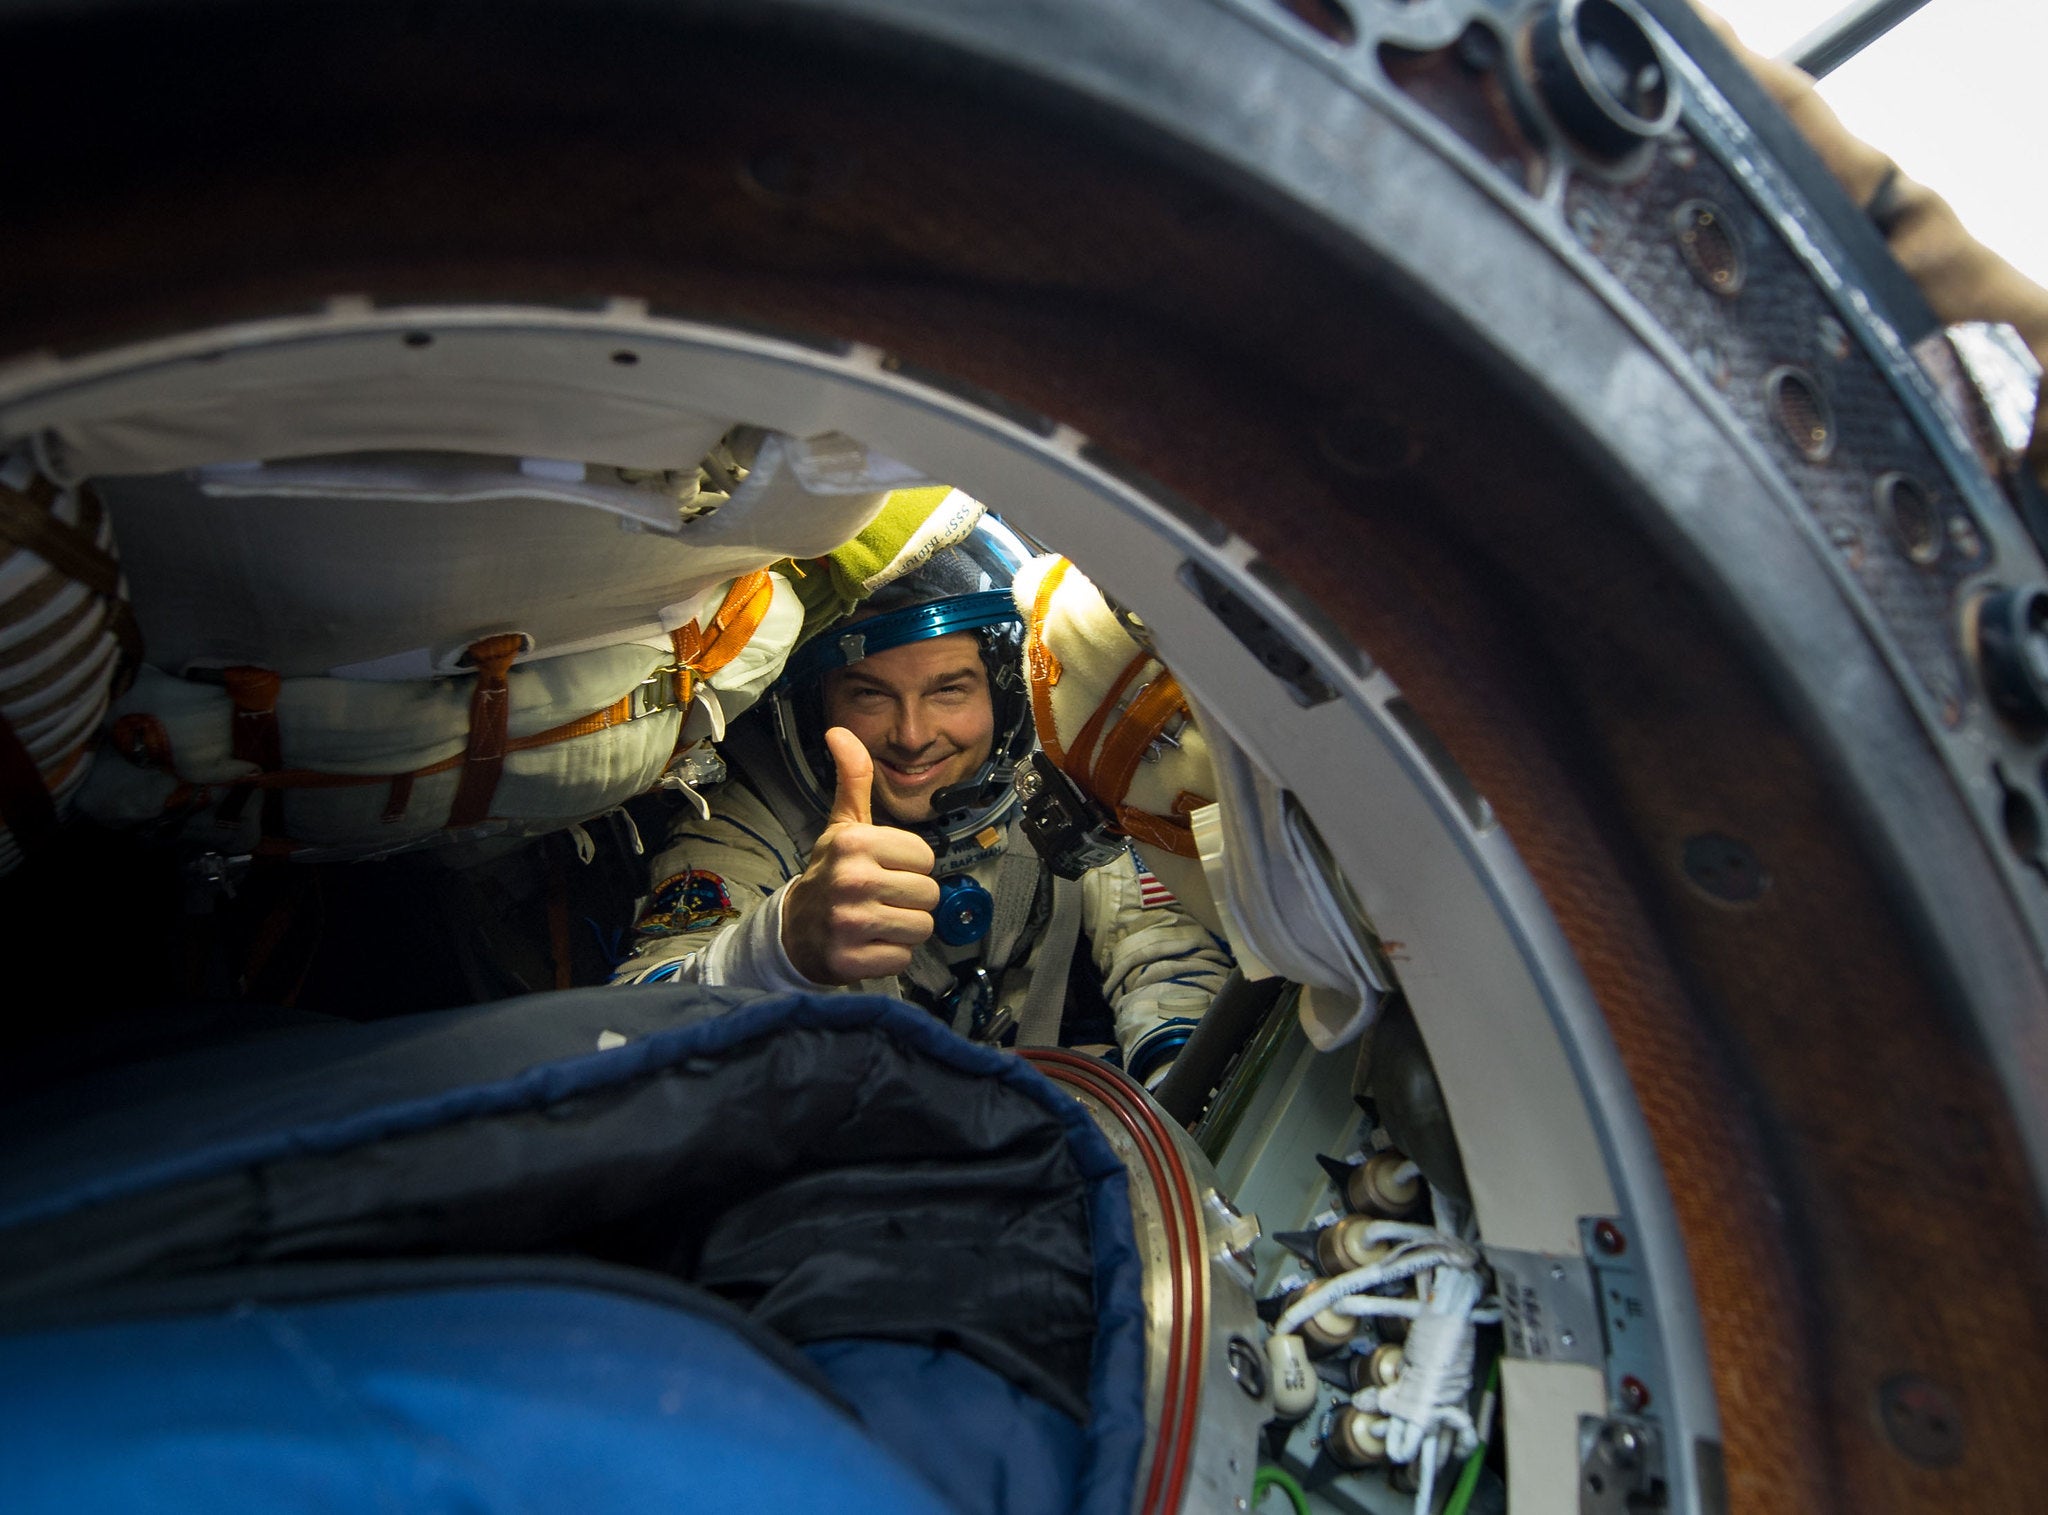 Wiseman inside a Russian-built Soyuz spacecraft shortly after landing, November 10, 2014. (Photo: NASA)